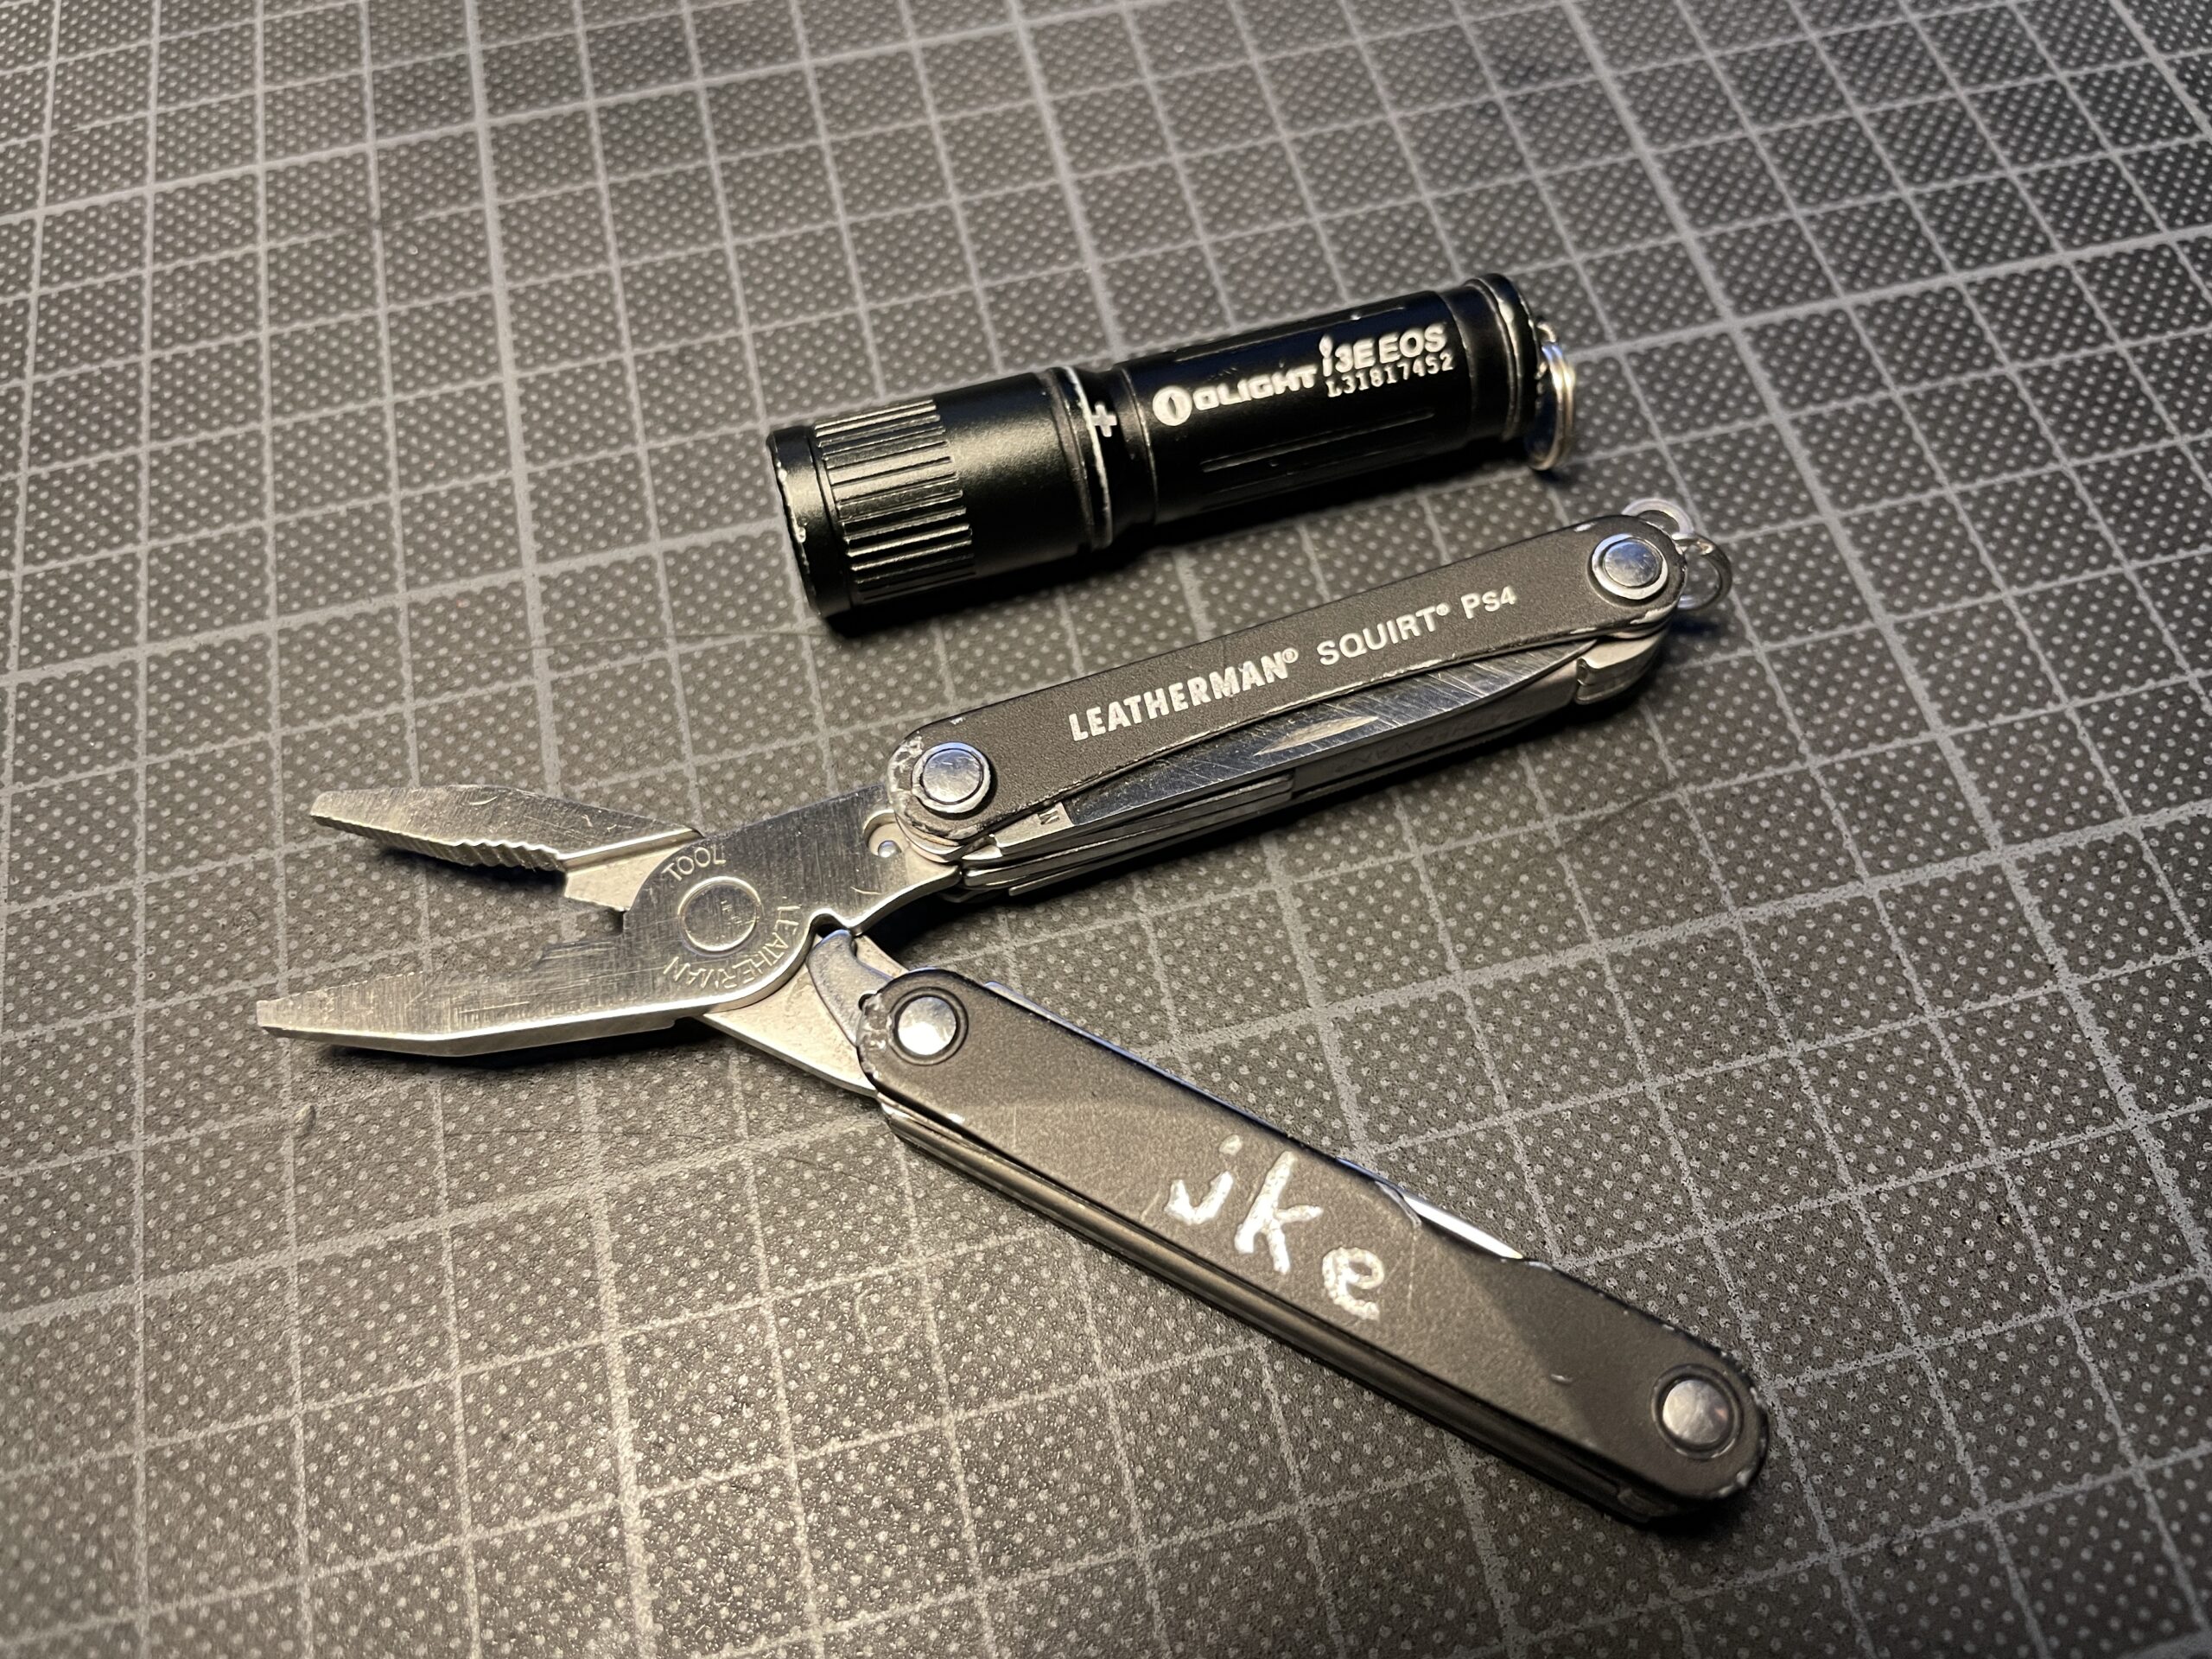 iFixit Utility Scissors